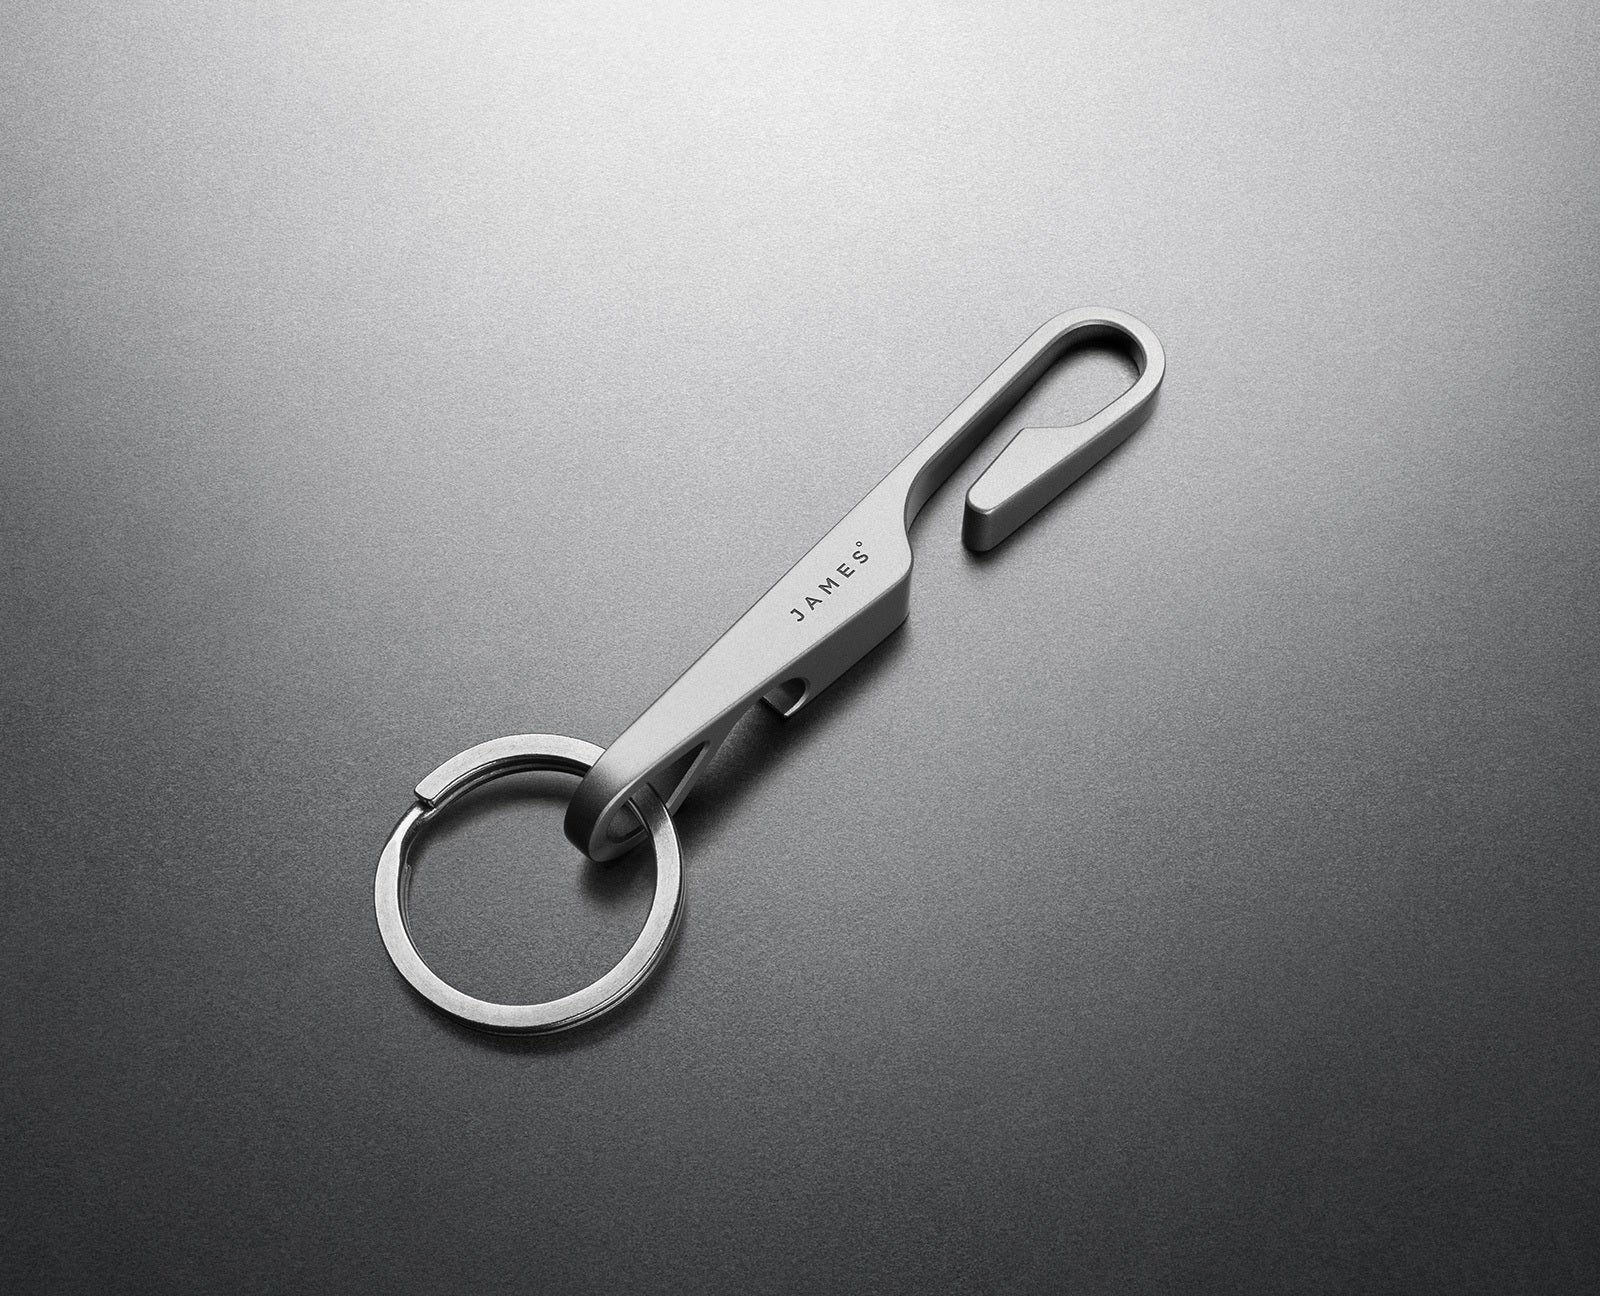 The Midland EDC Key Ring – The James Brand